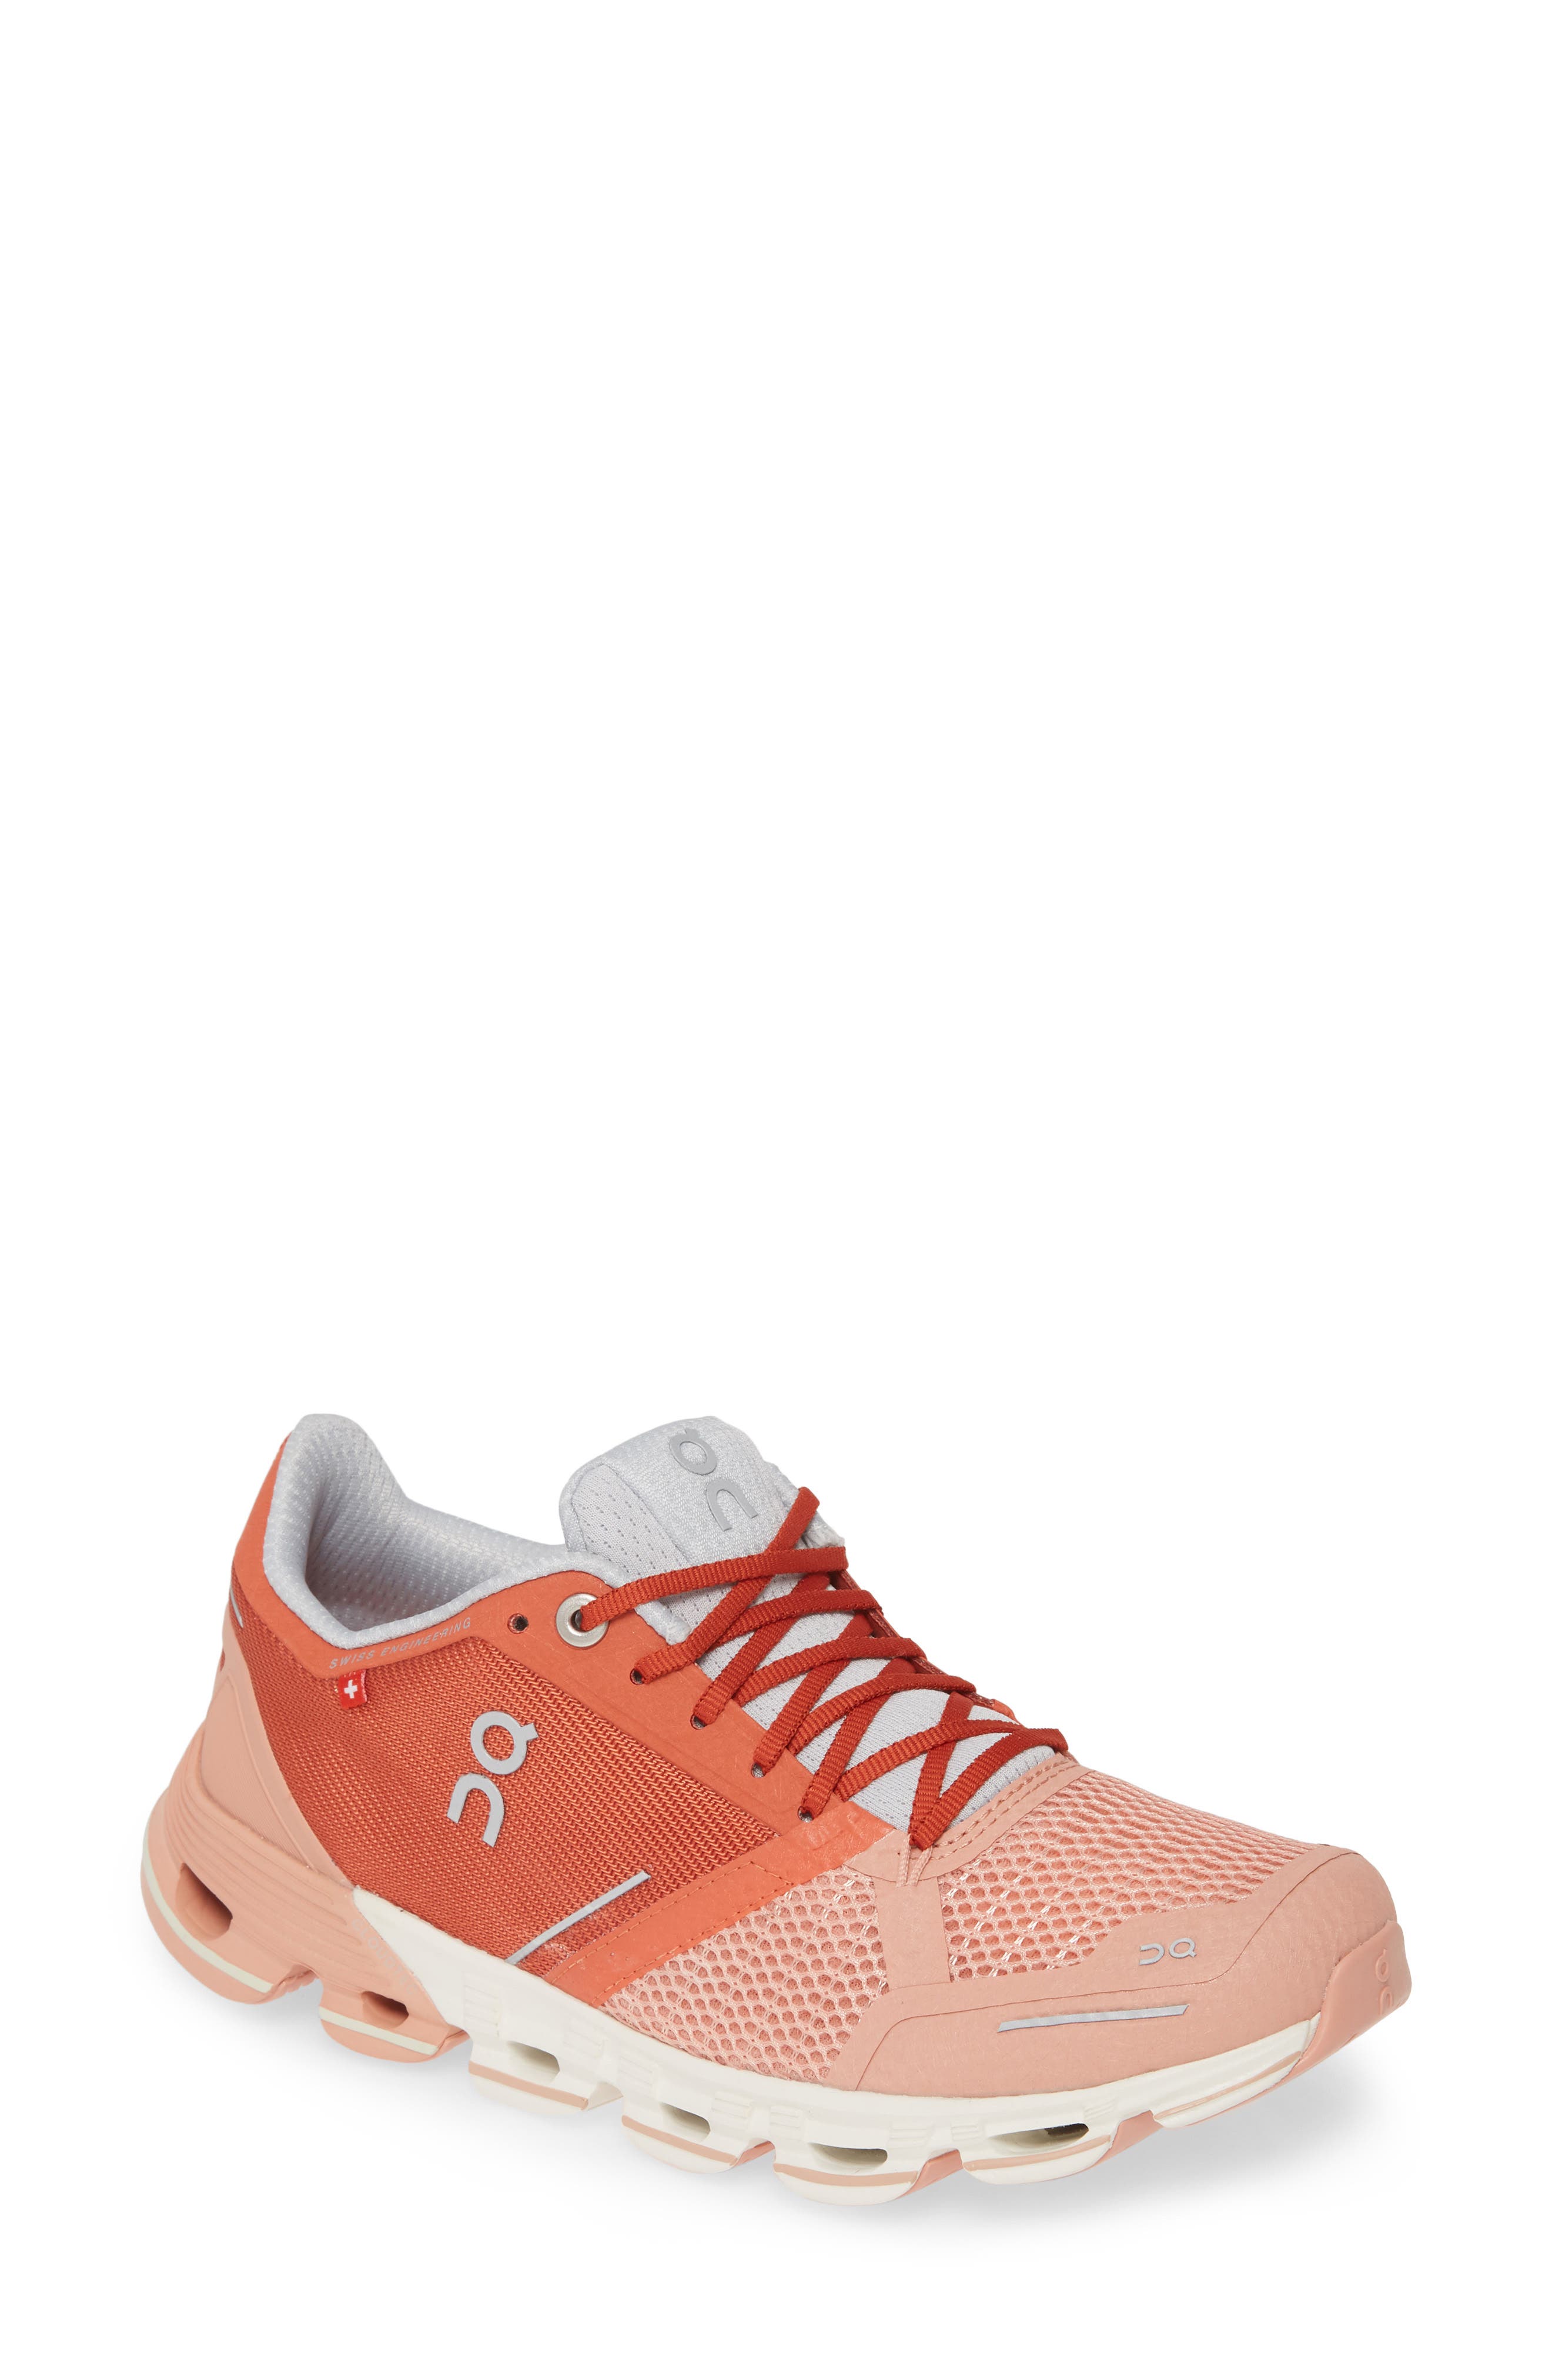 orange workout shoes